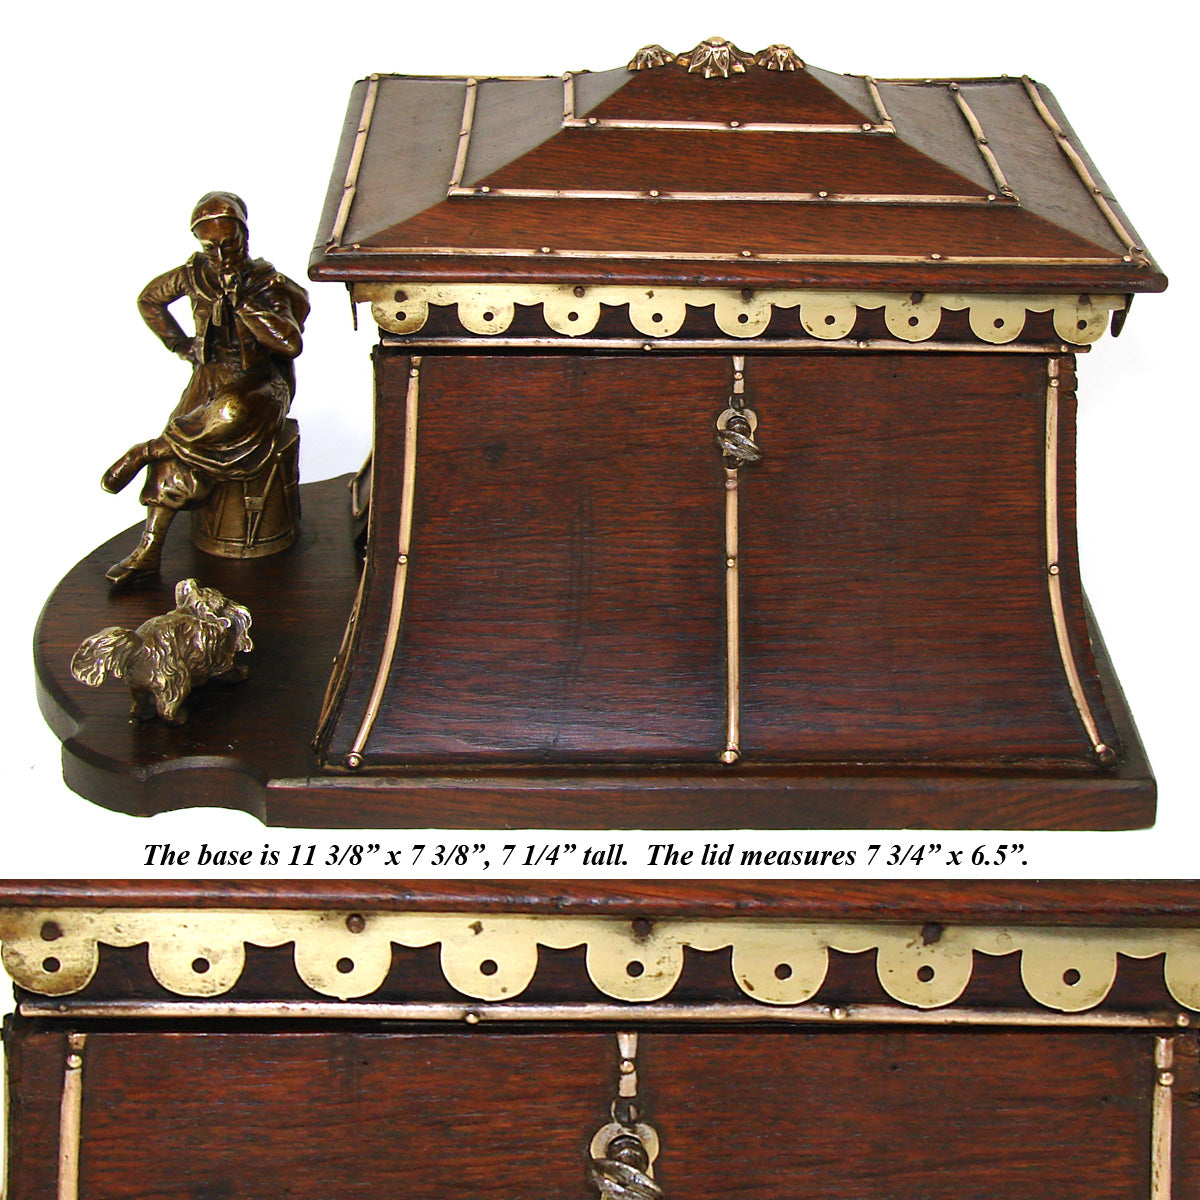 Rare Antique French Empire Revival Cigar Tantalus or Presenter, Box with Blackamoor & Dog